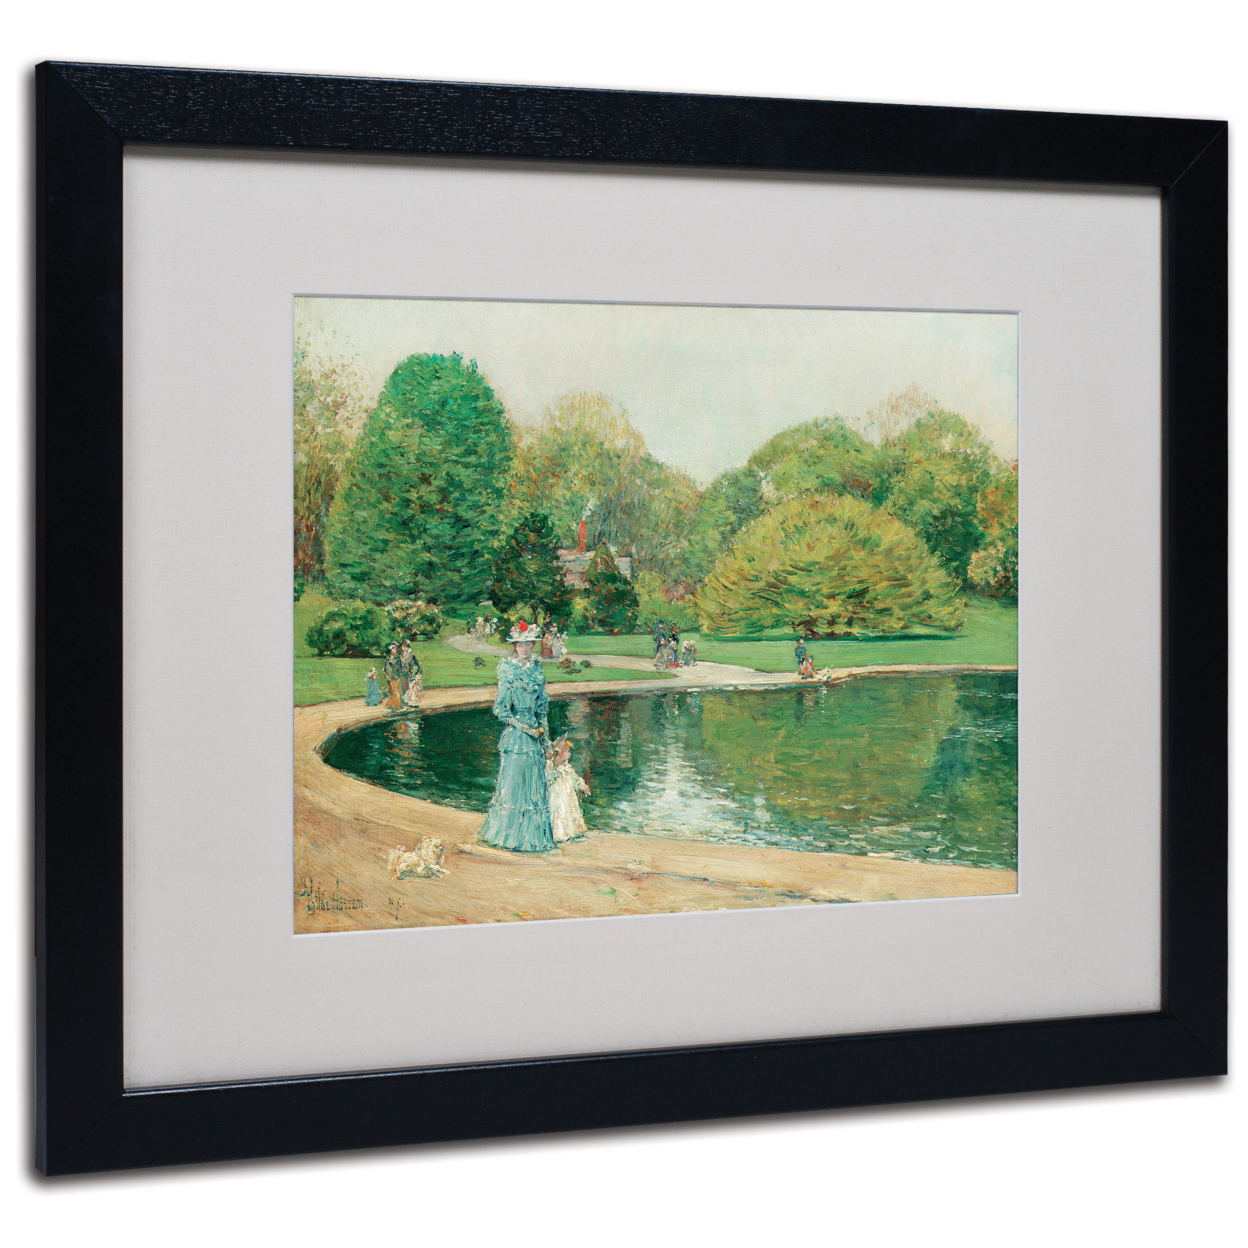 Childe Hassam 'Central Park' Black Wooden Framed Art 18 X 22 Inches